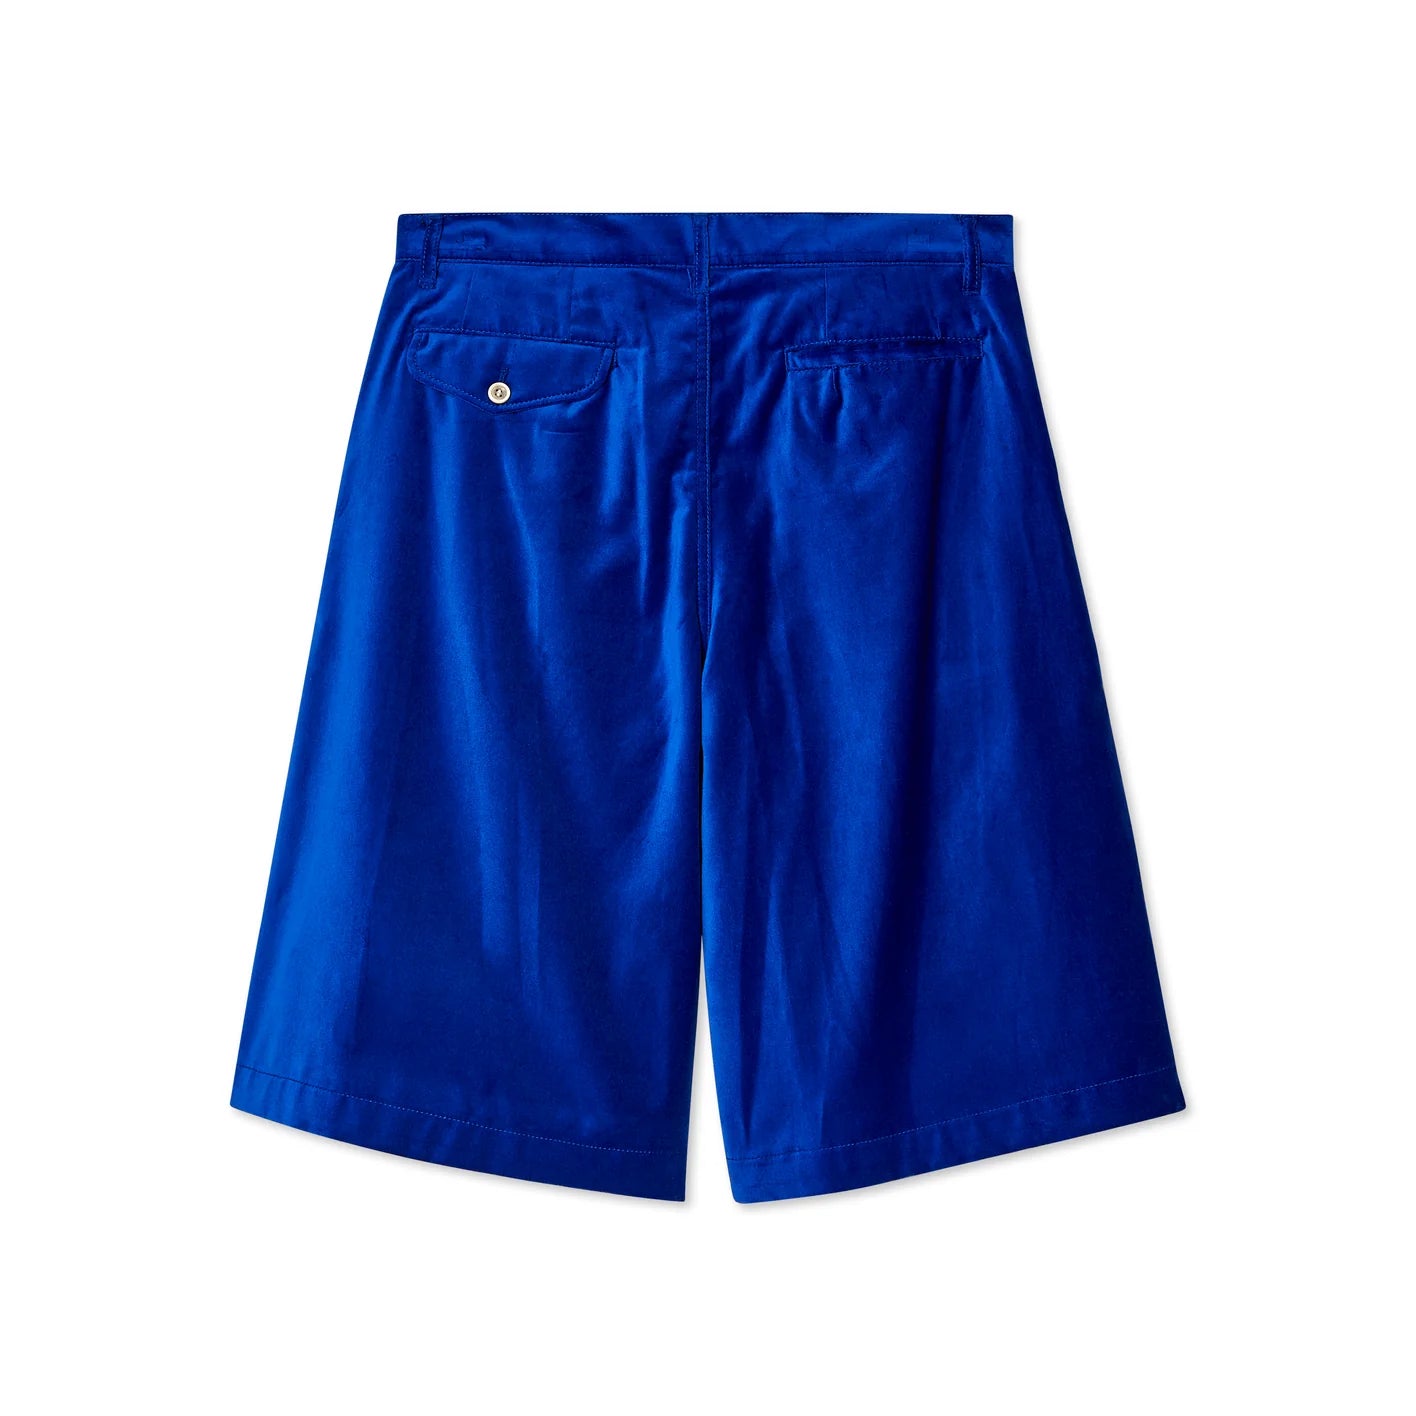 CDG Shirt - Men's Corduroy Shorts - (Blue) view 2